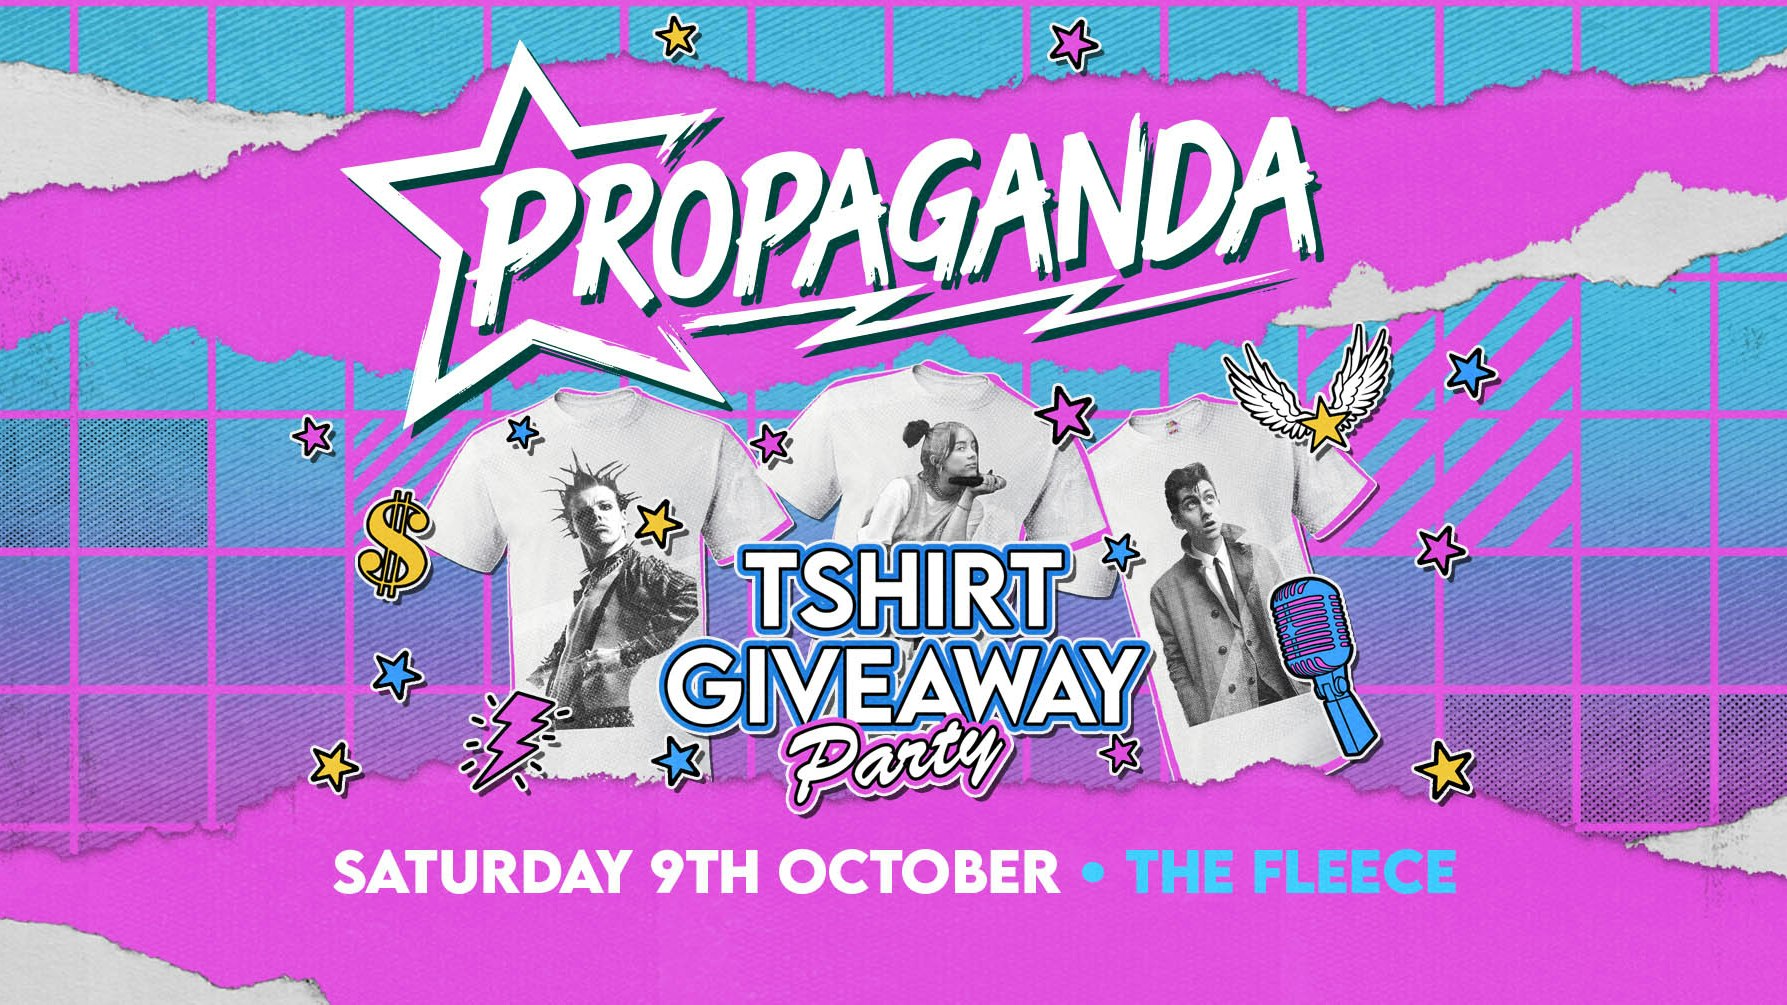 Propaganda Bristol – T-shirt Party!